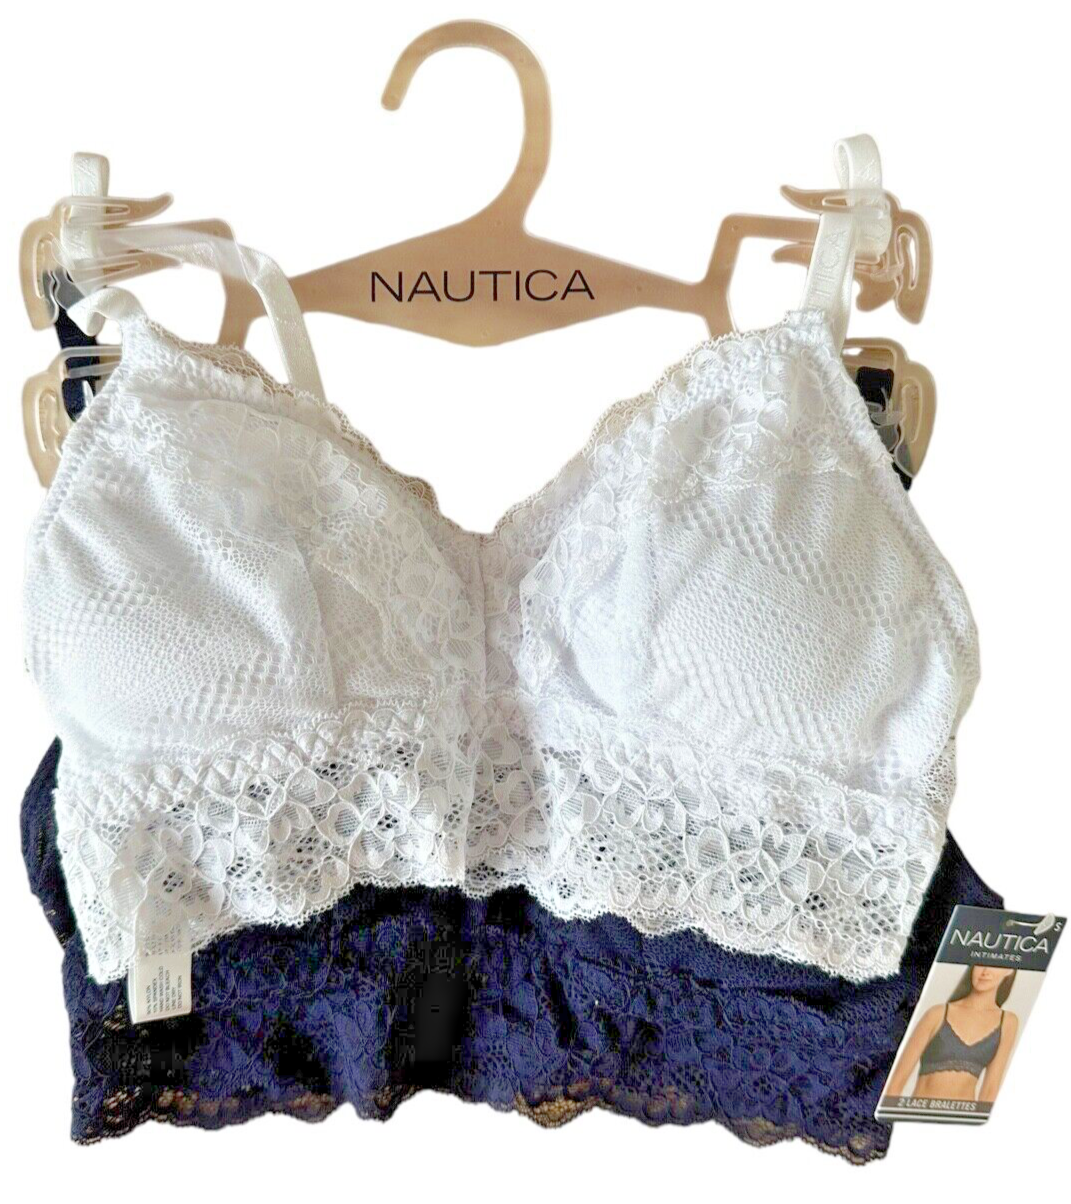 Nautica, Intimates & Sleepwear, Nautica 3pk Red Grey And Blue Comfy  Straps Everyday Bras Plus Size 42d